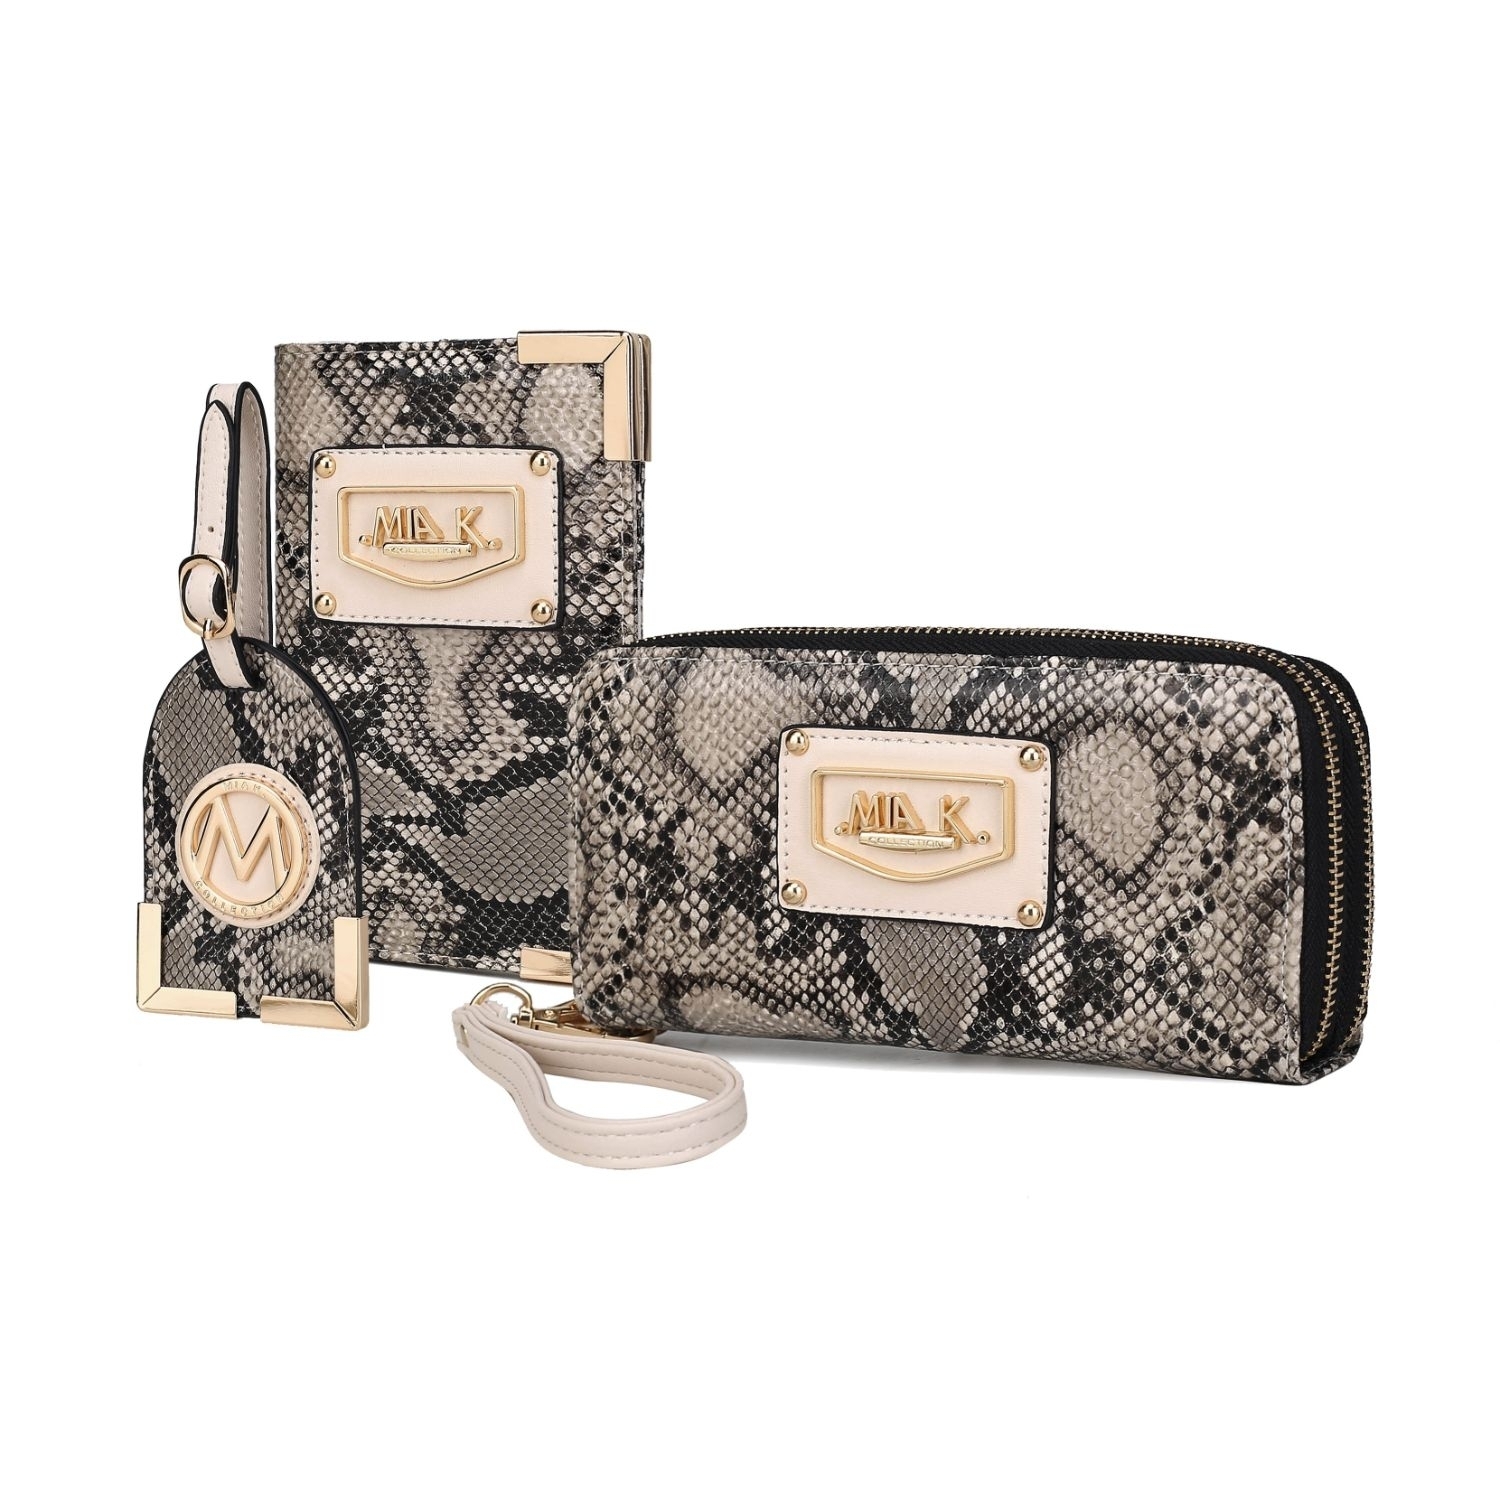 MKF Collection Darla Snake Travel Gift Set Handbag By Mia K 3 Pieces - Navy